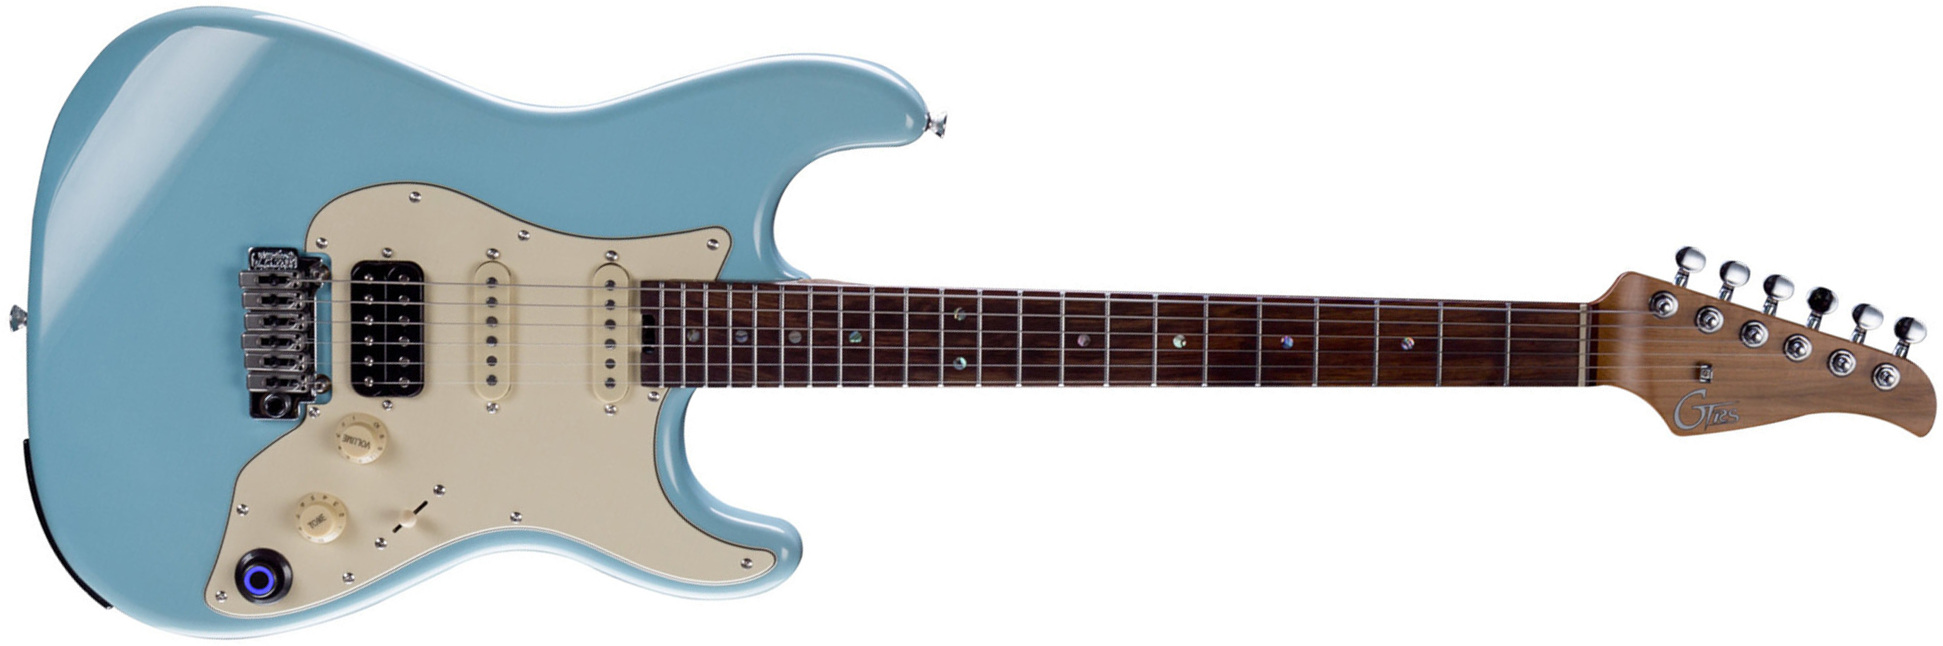 Mooer Gtrs P800 Pro Intelligent Guitar Hss Trem Rw - Tiffany Blue - Modeling guitar - Main picture